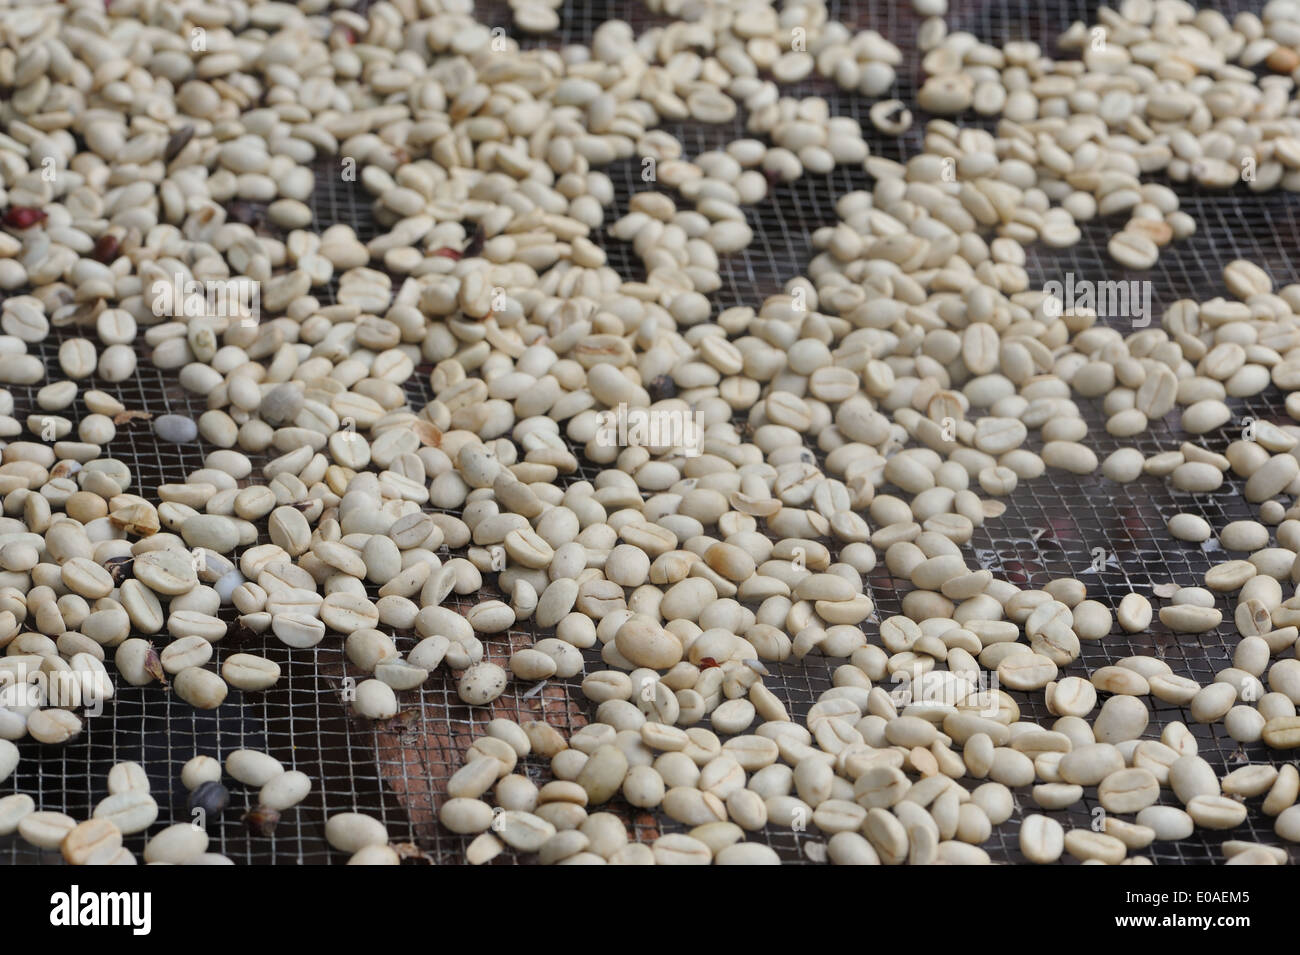 Coffee beans drying on racks in the sun. Santa Elena, Costa Rica. Stock Photo